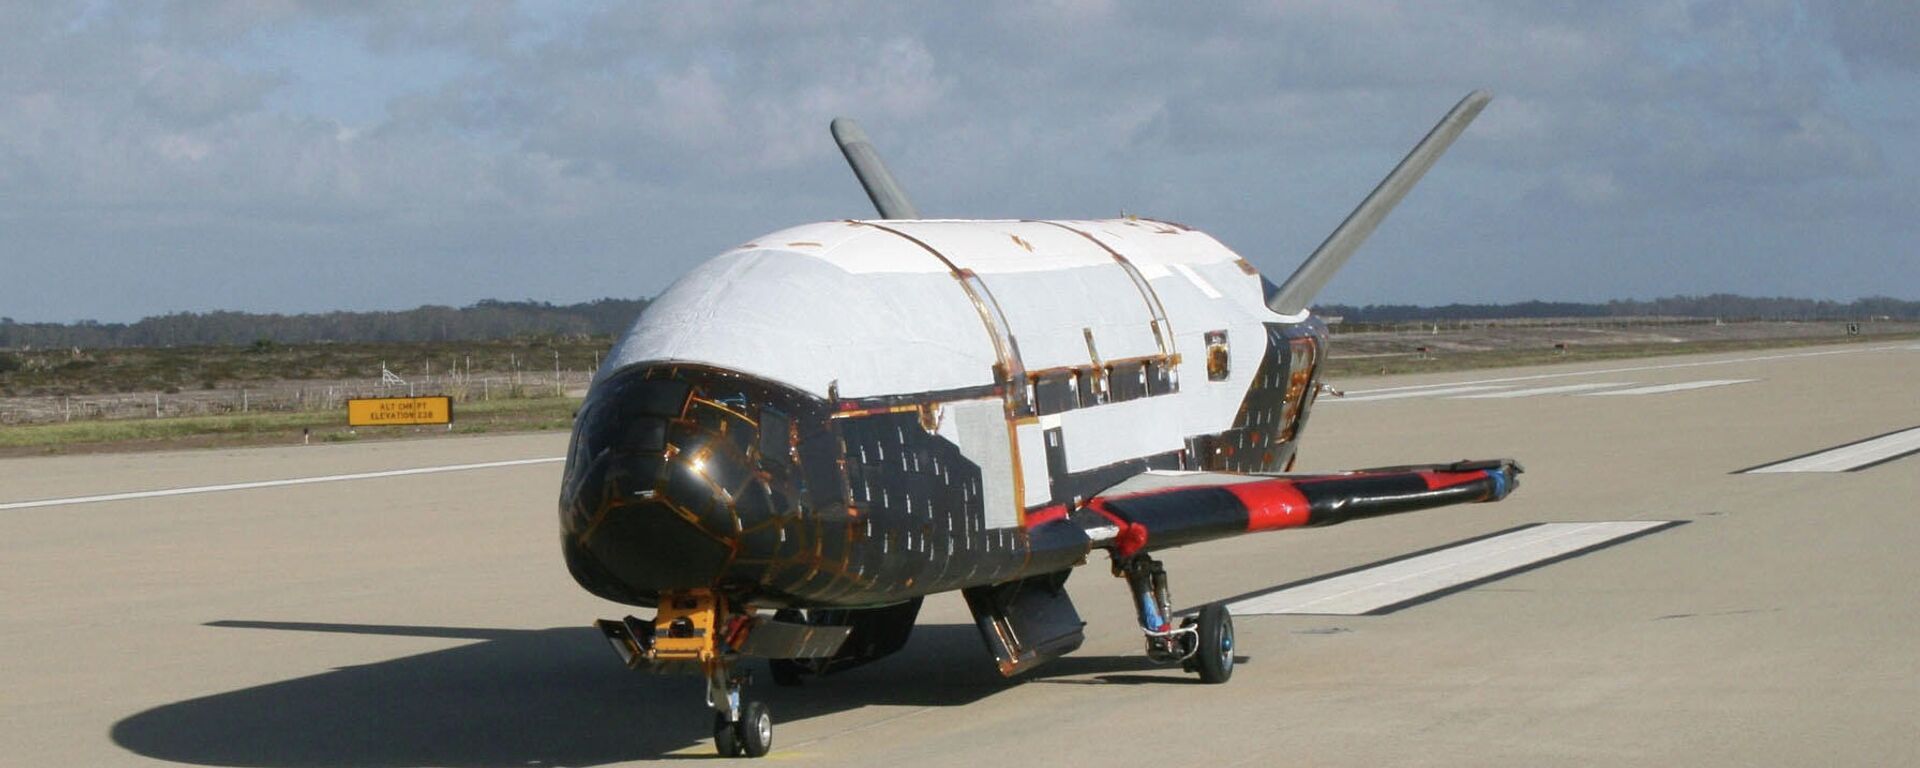 El dron espacial estadounidense X-37 - Sputnik Mundo, 1920, 20.11.2021